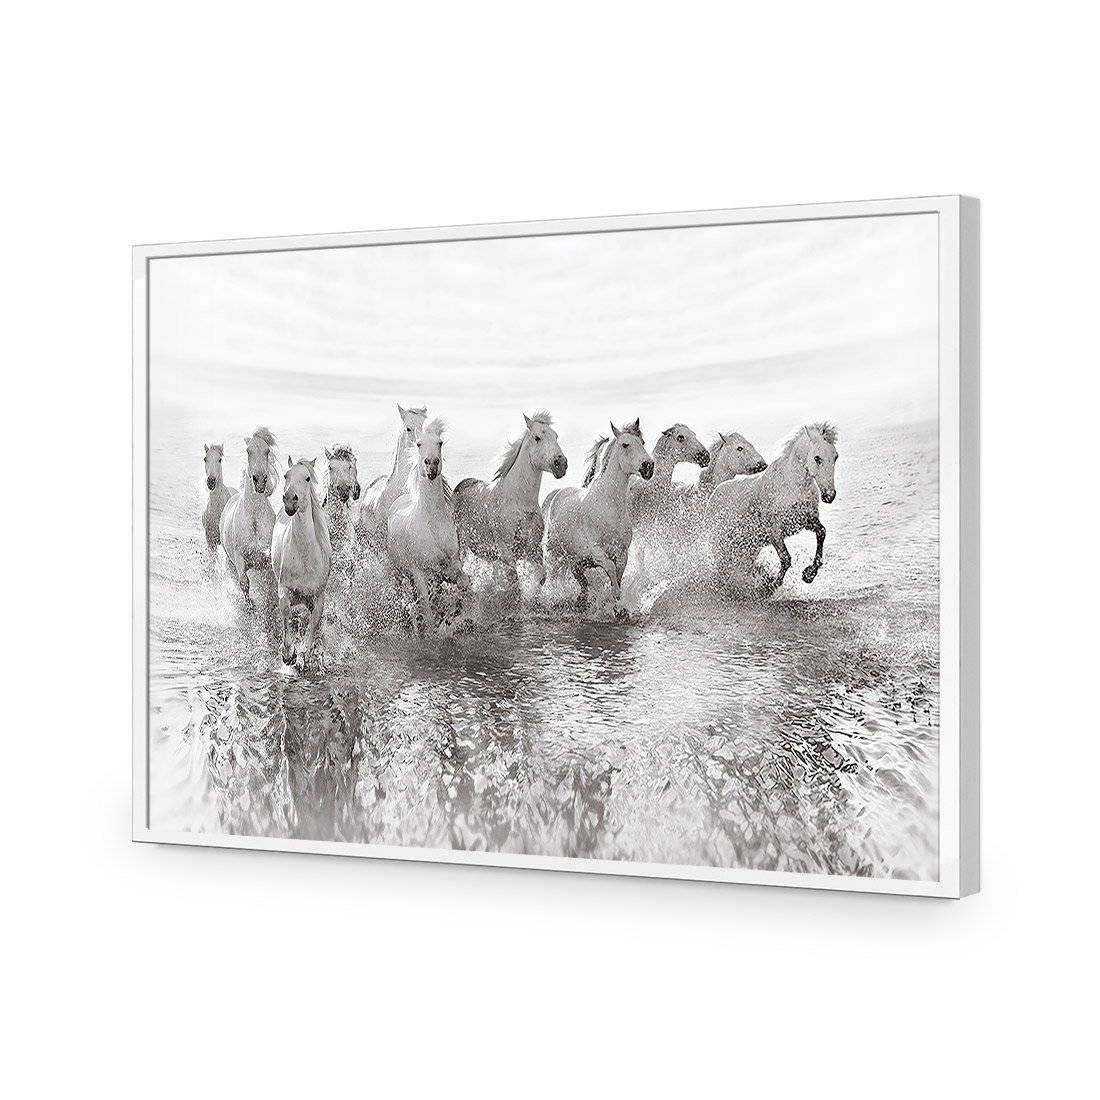 Illusion of Power by Roman Golubenko-Acrylic-Wall Art Design-Without Border-Acrylic - White Frame-45x30cm-Wall Art Designs